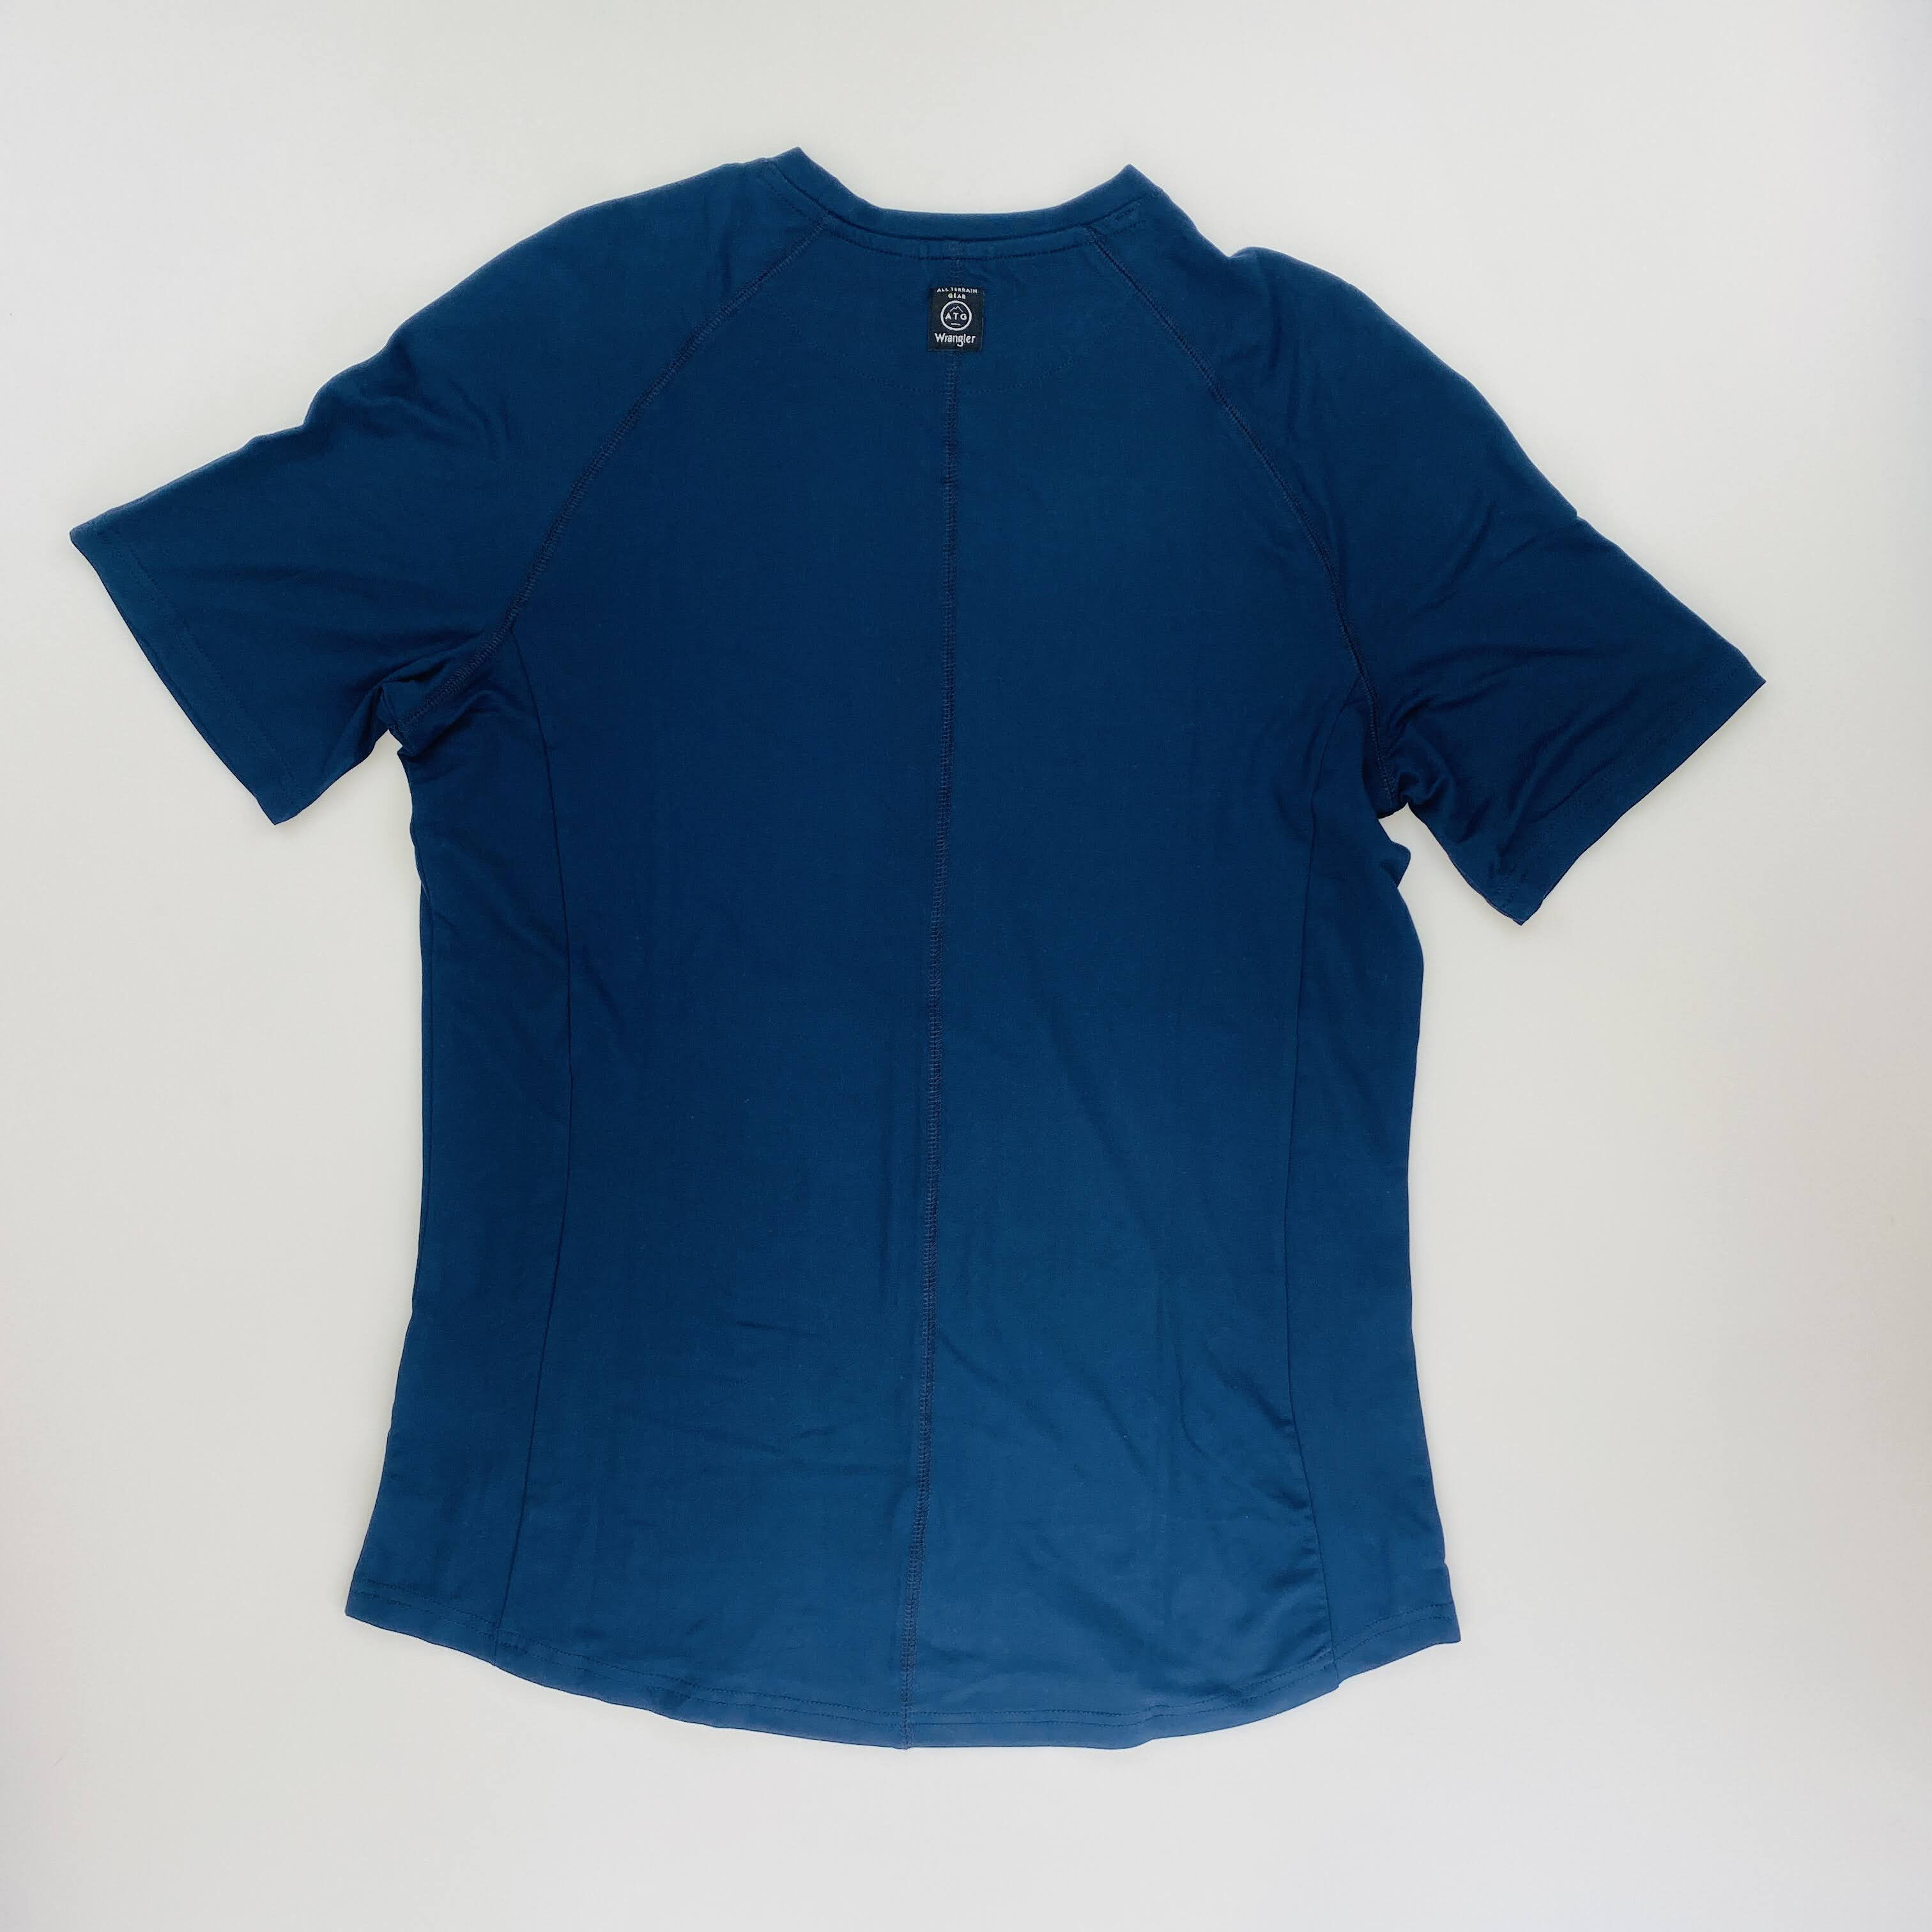 Wrangler Ss Performance T Shirt - Seconde main T-shirt homme - Bleu - S | Hardloop